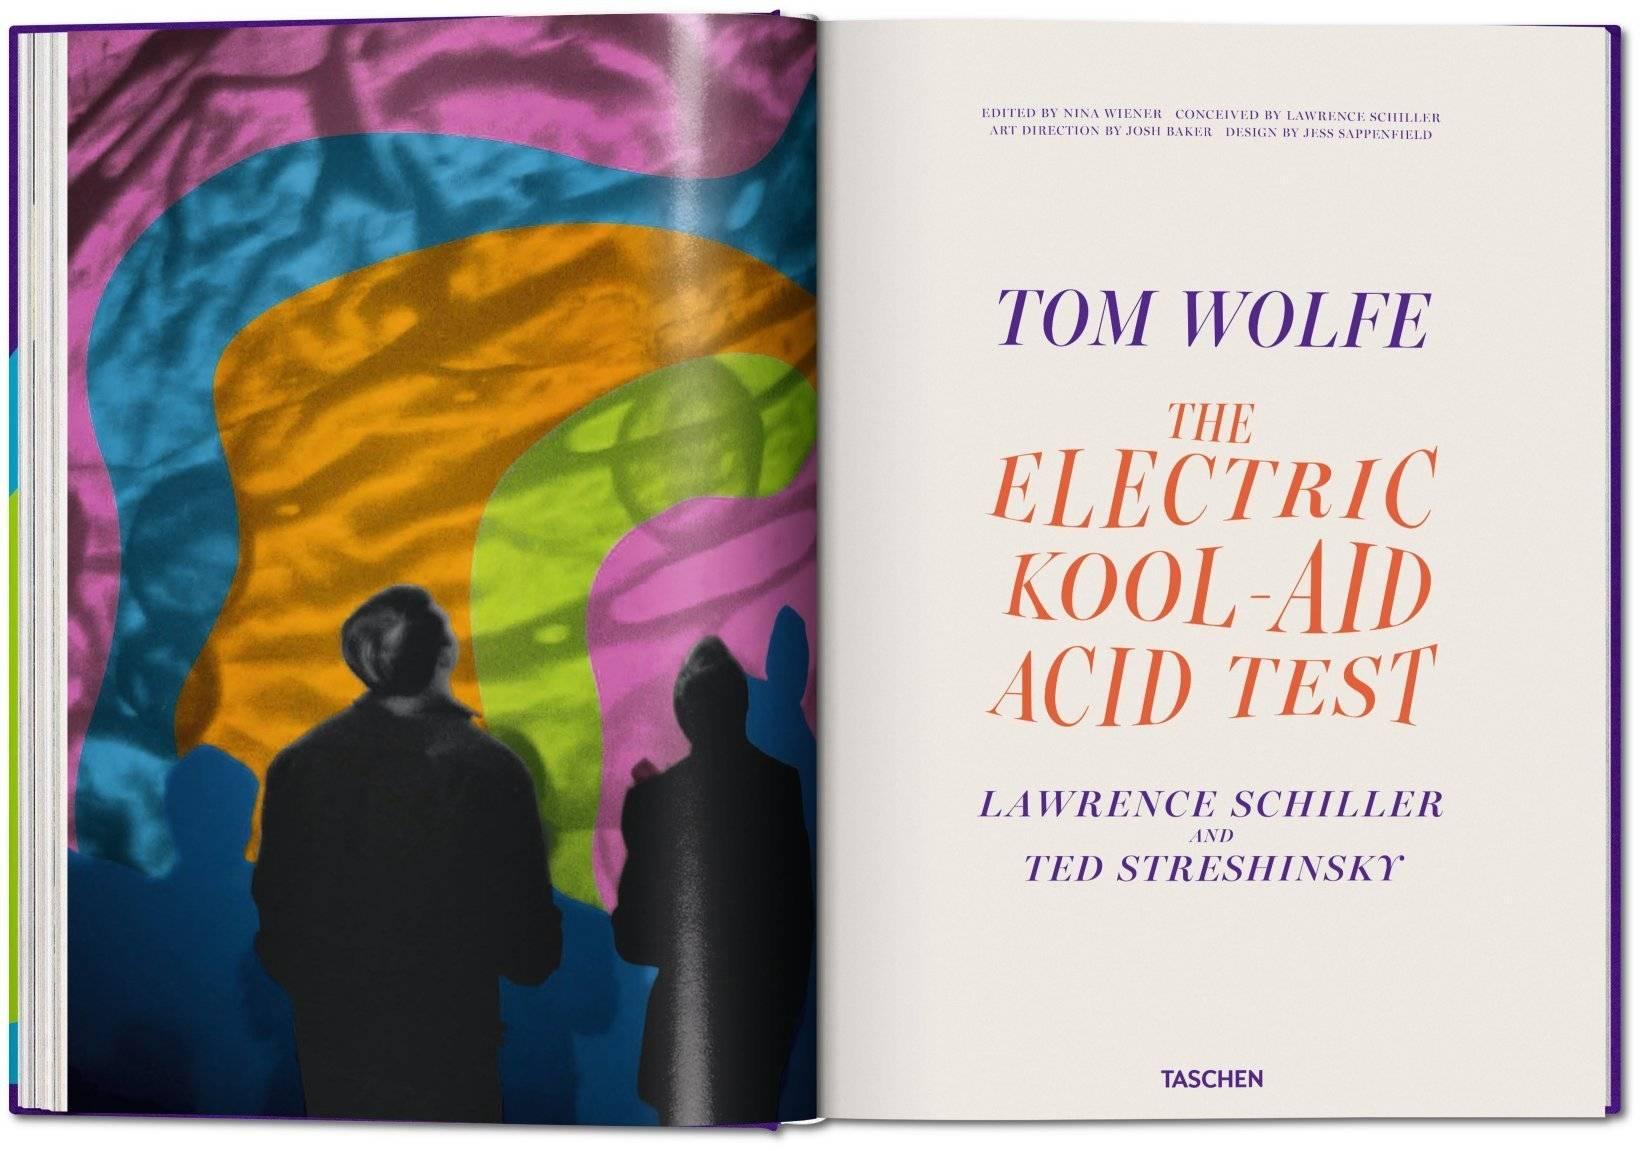 Paper Tom Wolfe, The Electric Kool-Aid Acid Test, Art Edition 